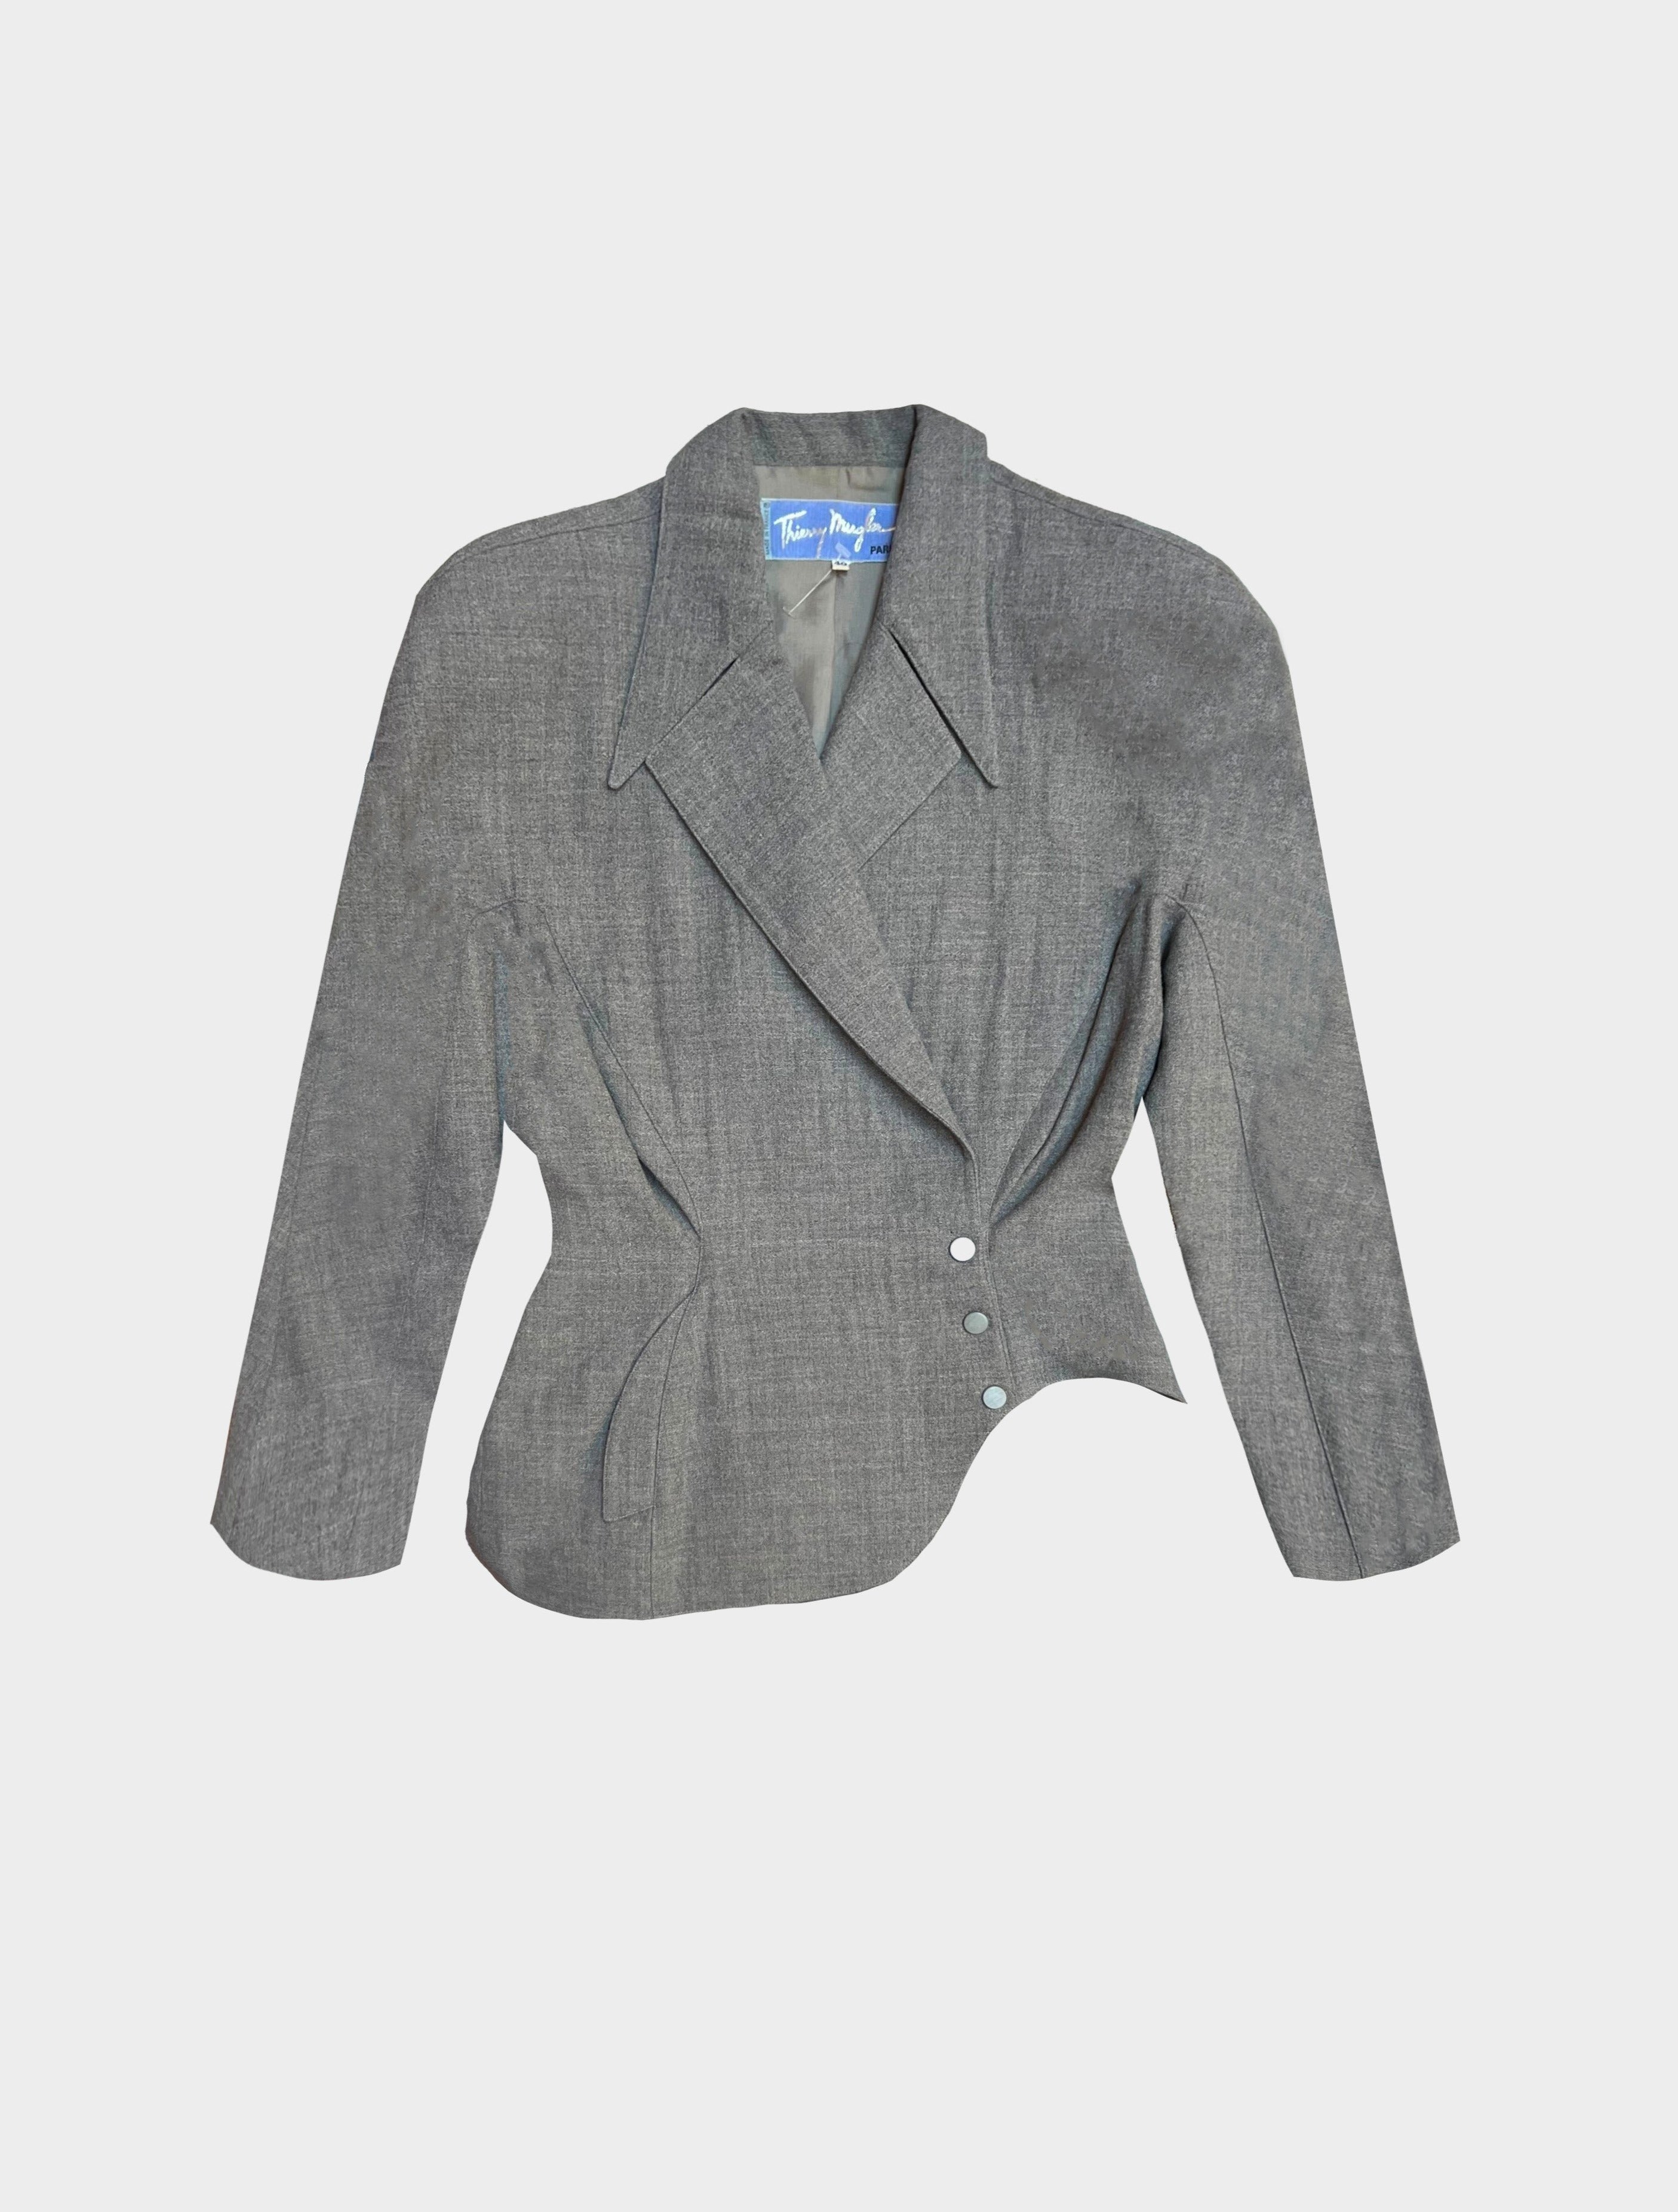 Thierry Mugler 1990s Grey Wool Asymmetrical Jacket